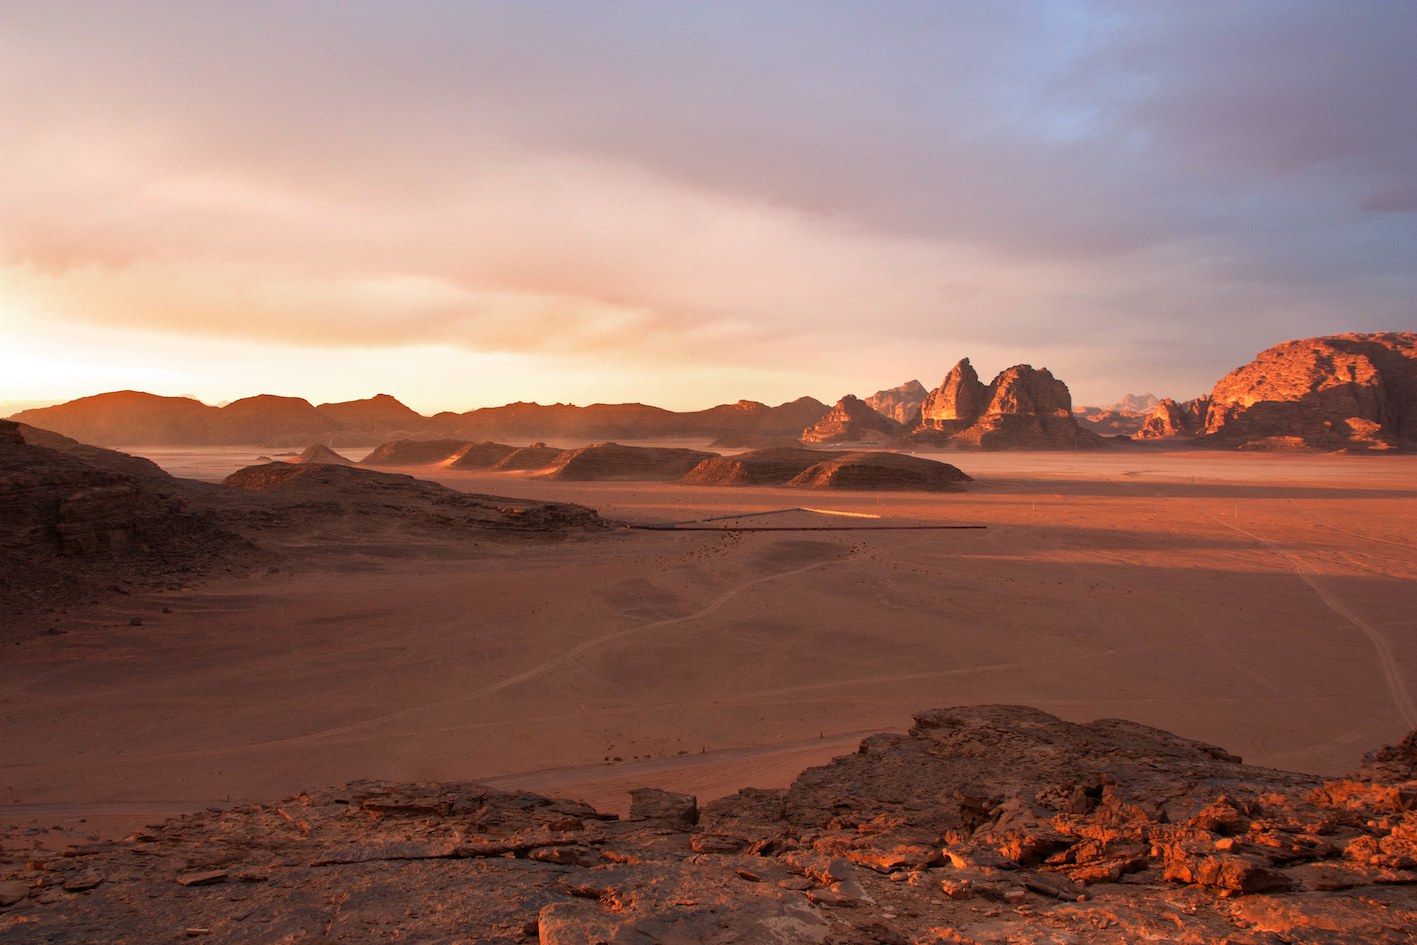 Sunset on the Wadi Rum Desert in Jordan. Picture from www.wadirum.jo